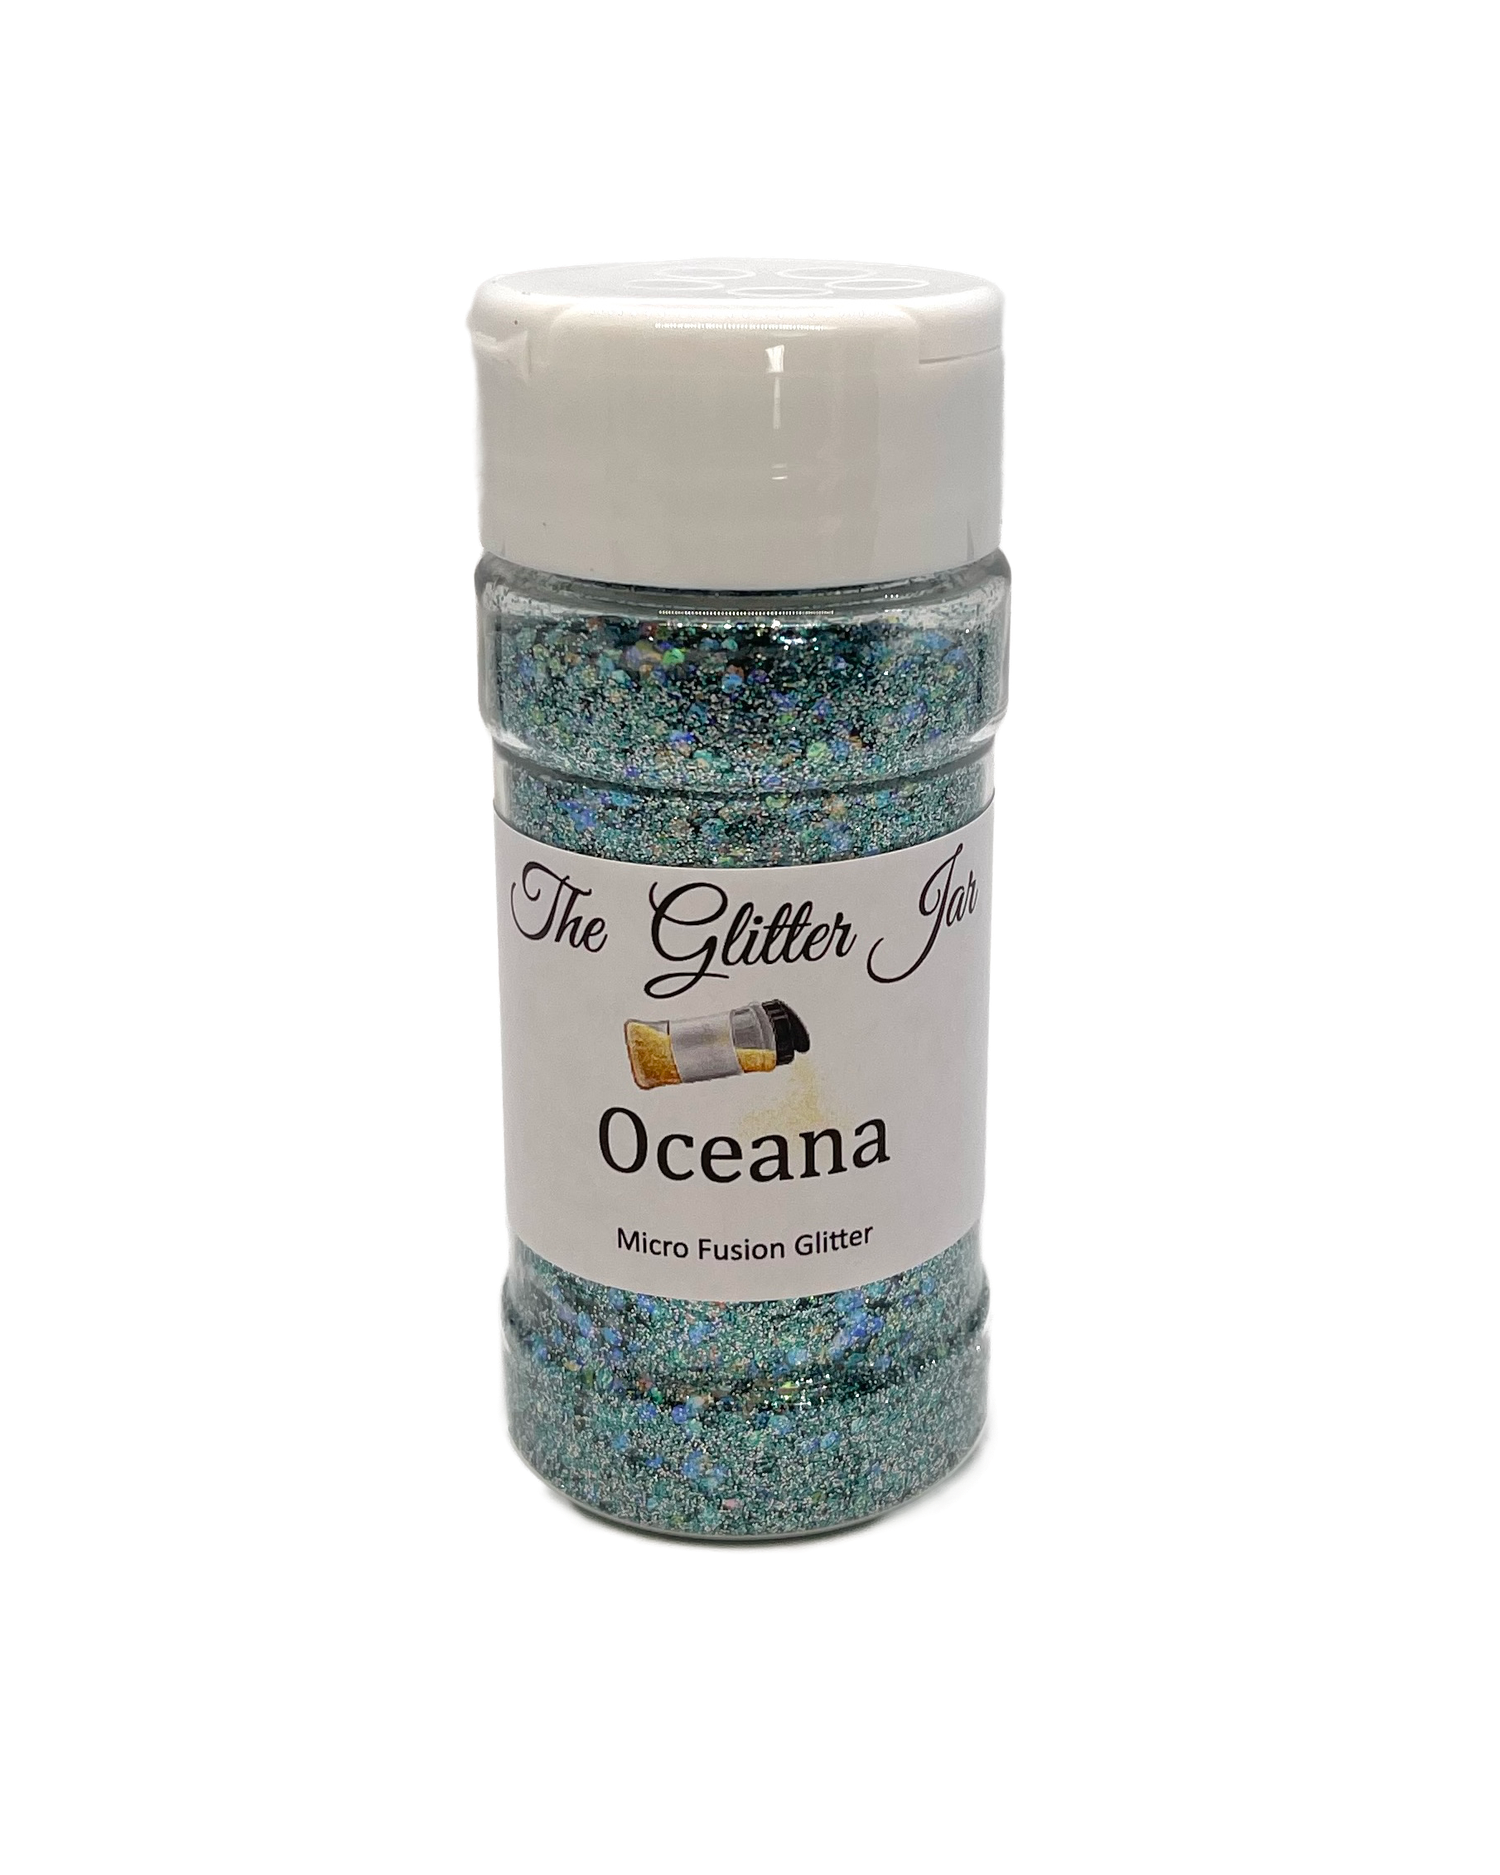 Oceana Micro Fusion Glitter The Glitter Jar